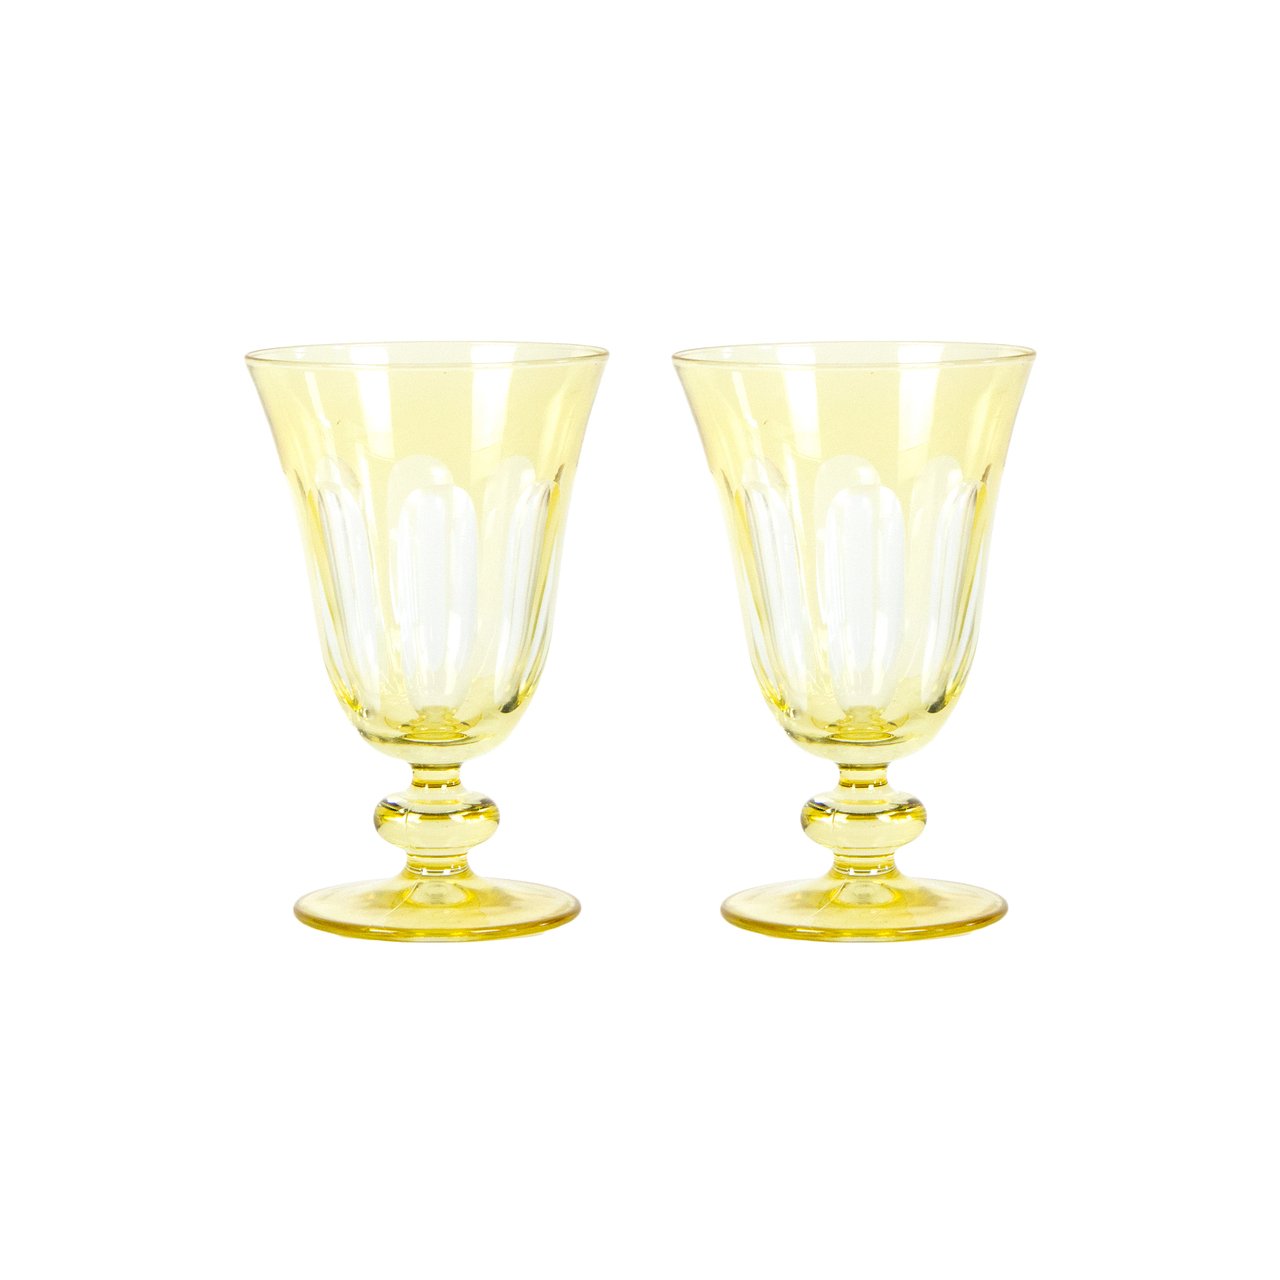 Set of 2 Rialto Limoncello (Light Yellow) Glasses